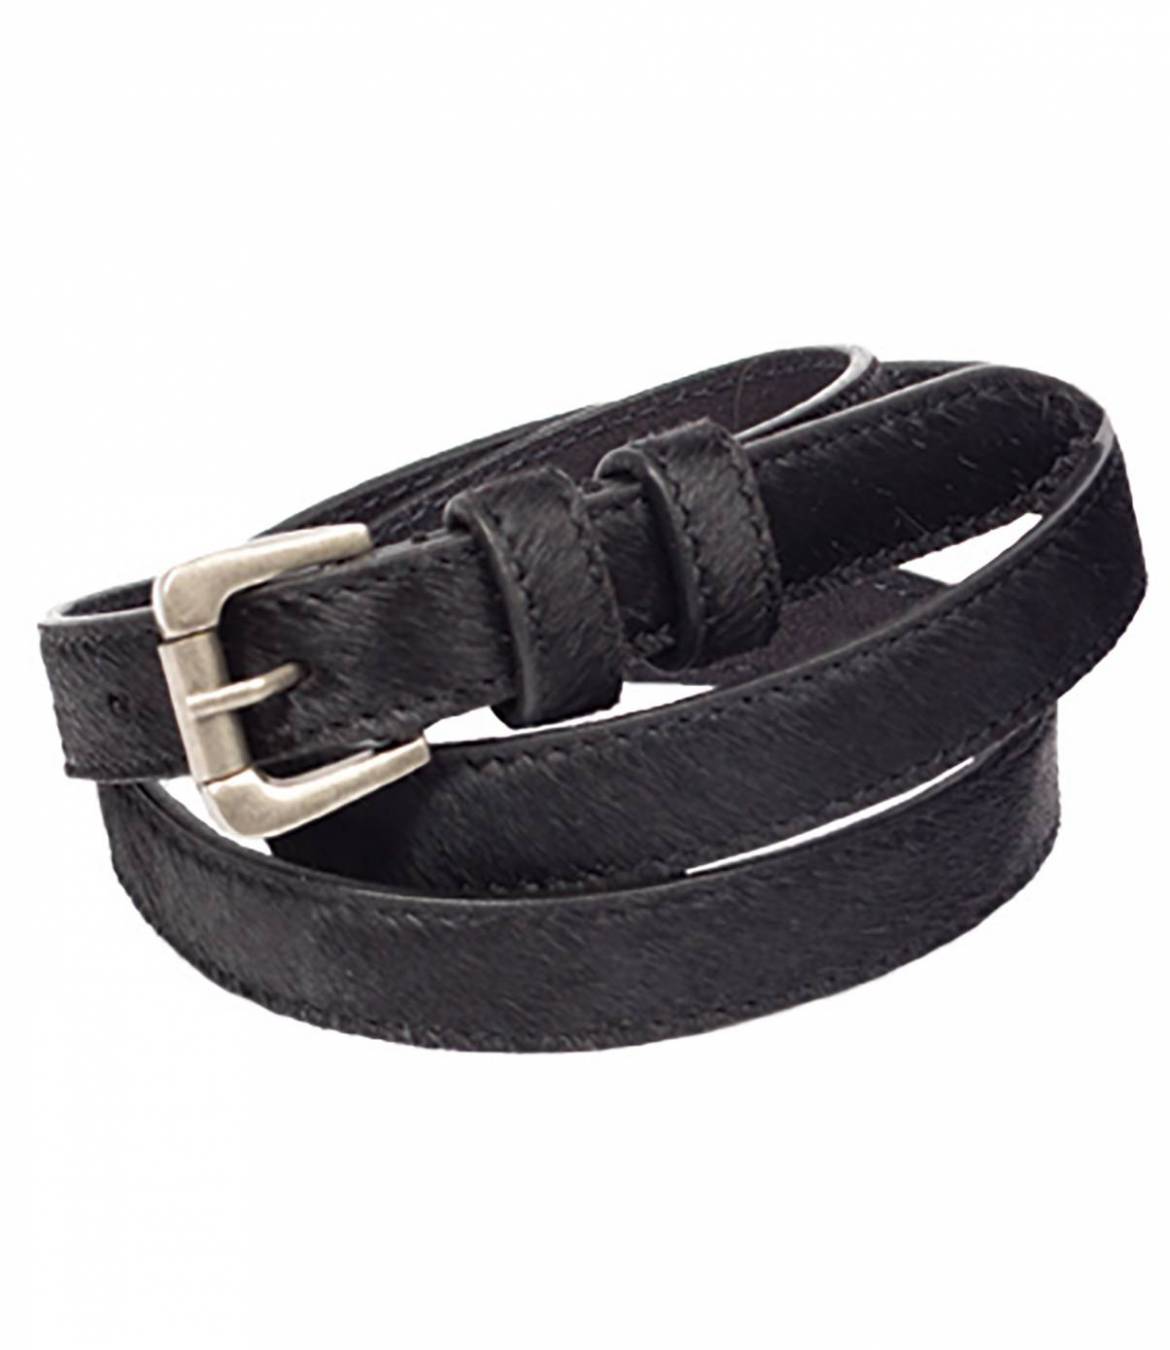 BELT 2cm Women's Leather Belts Storiatipic - 3